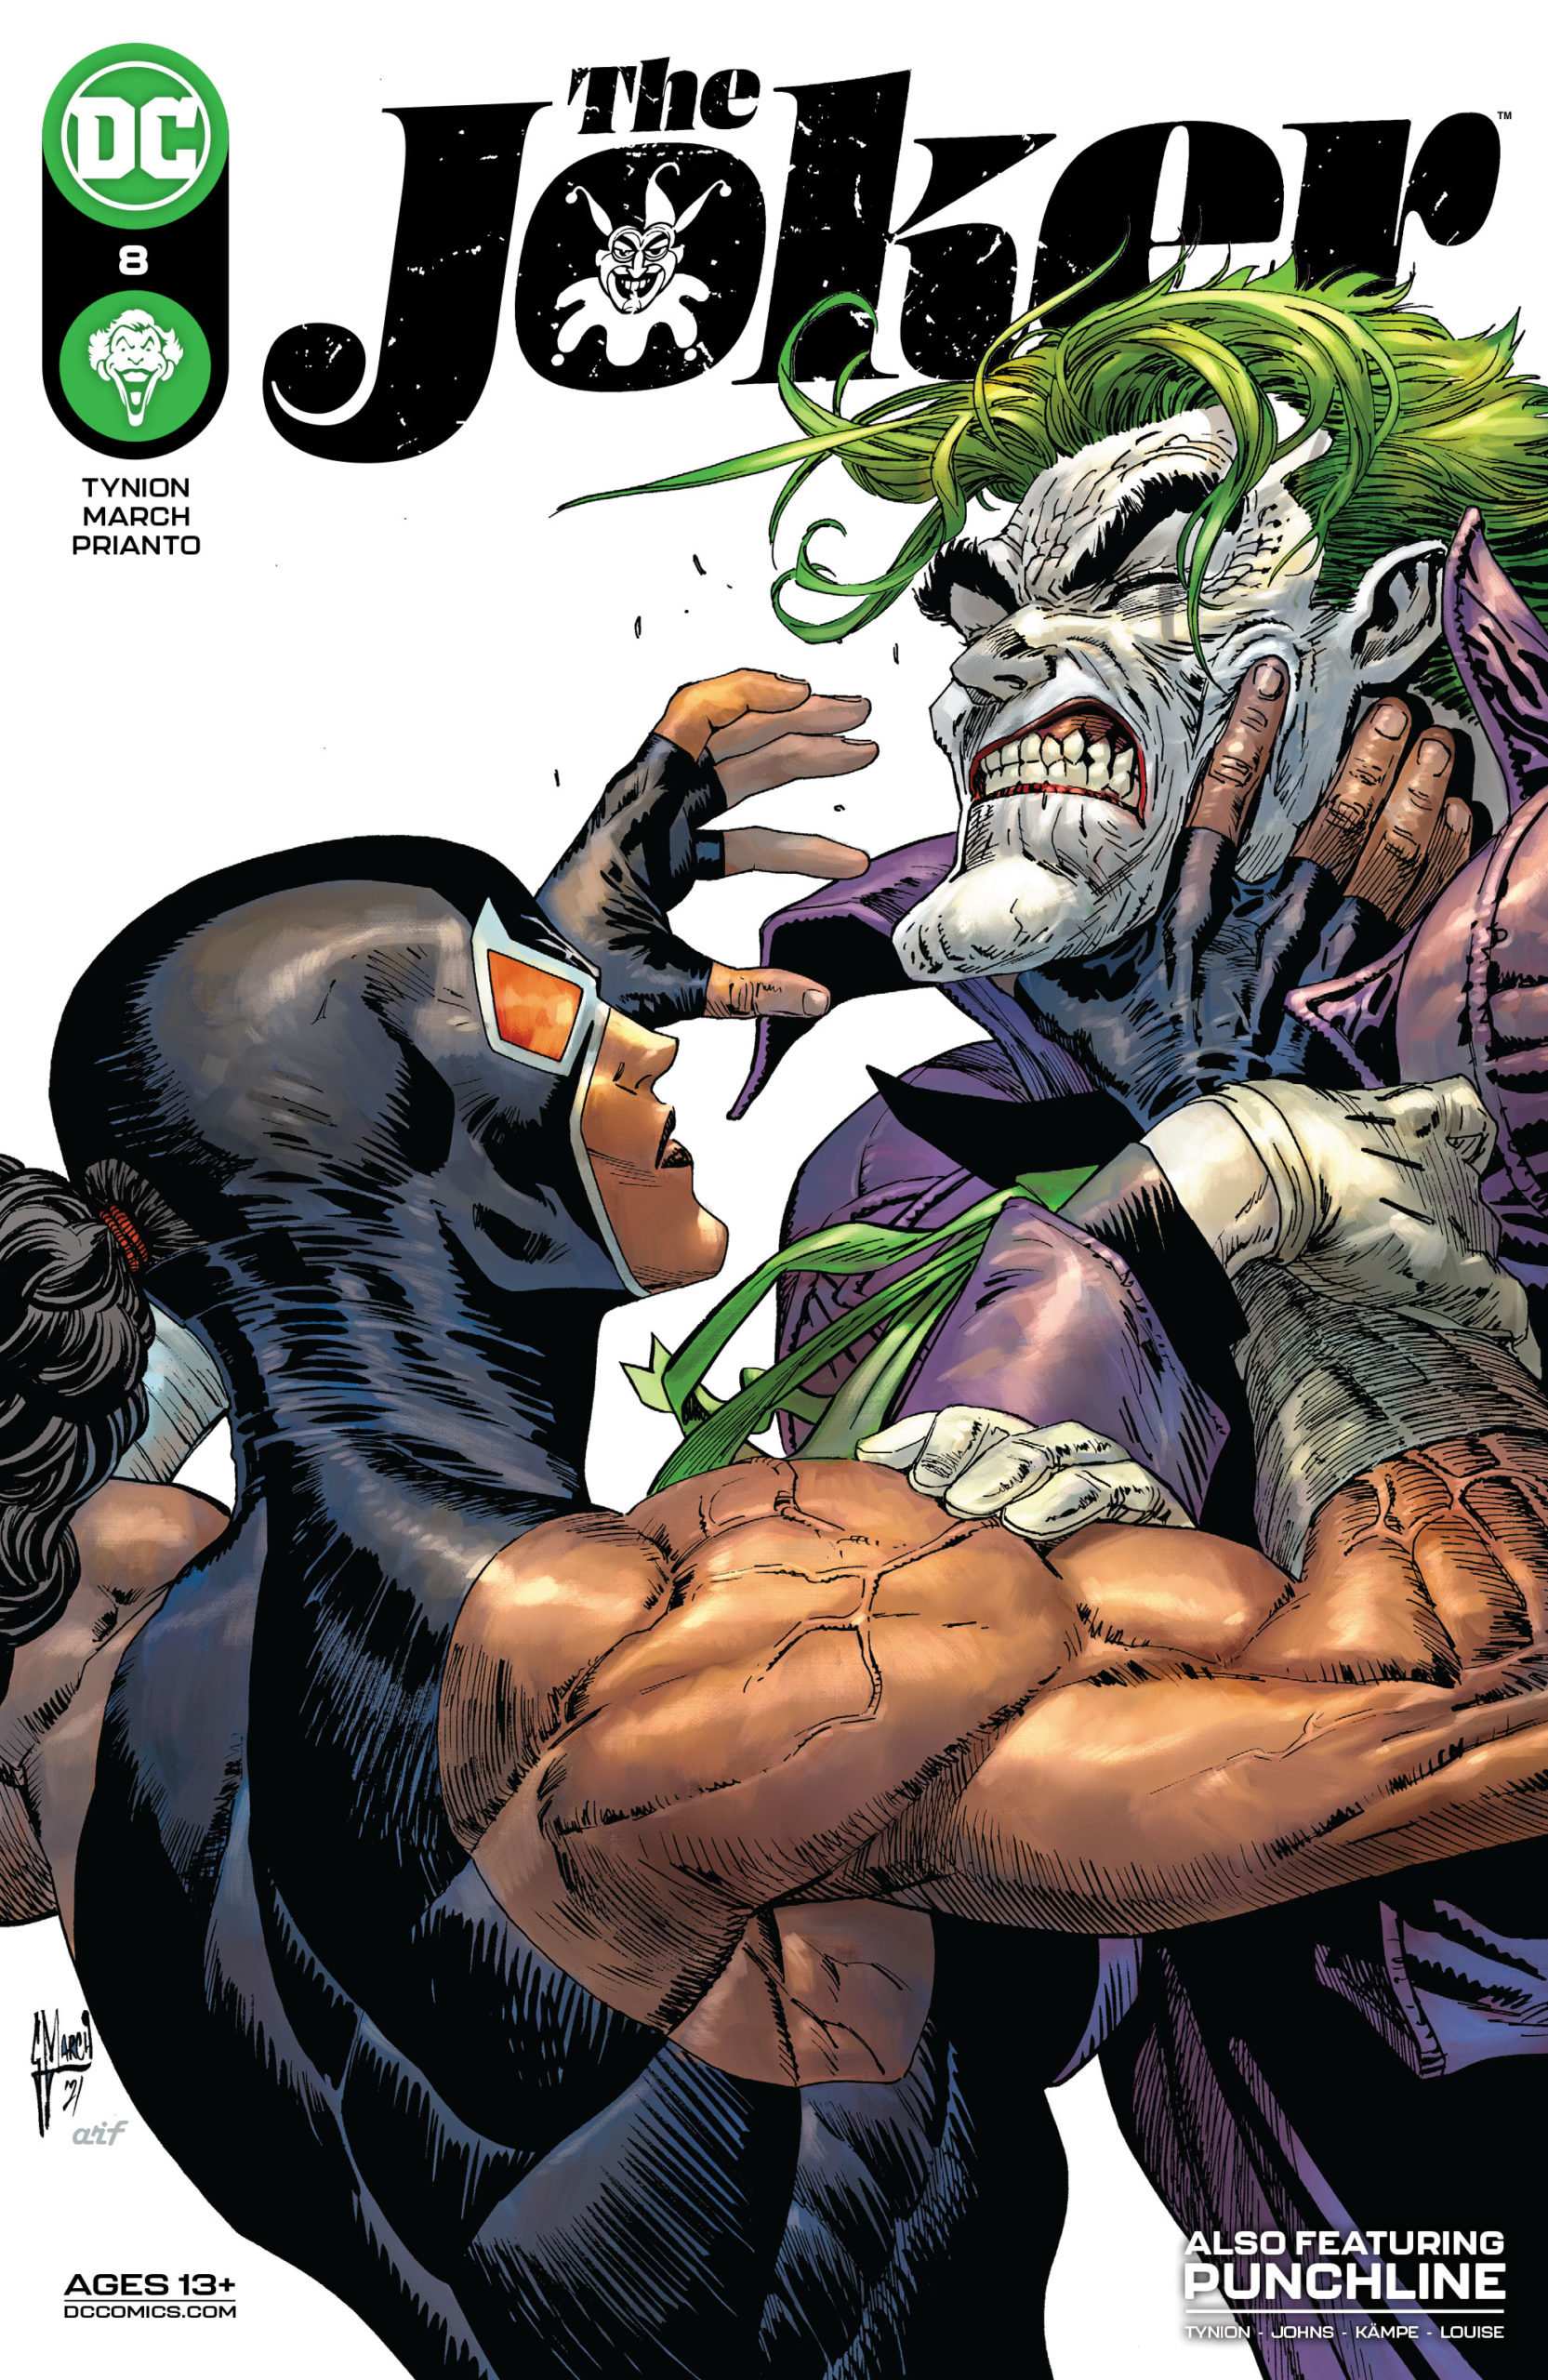 Review: The Joker #8